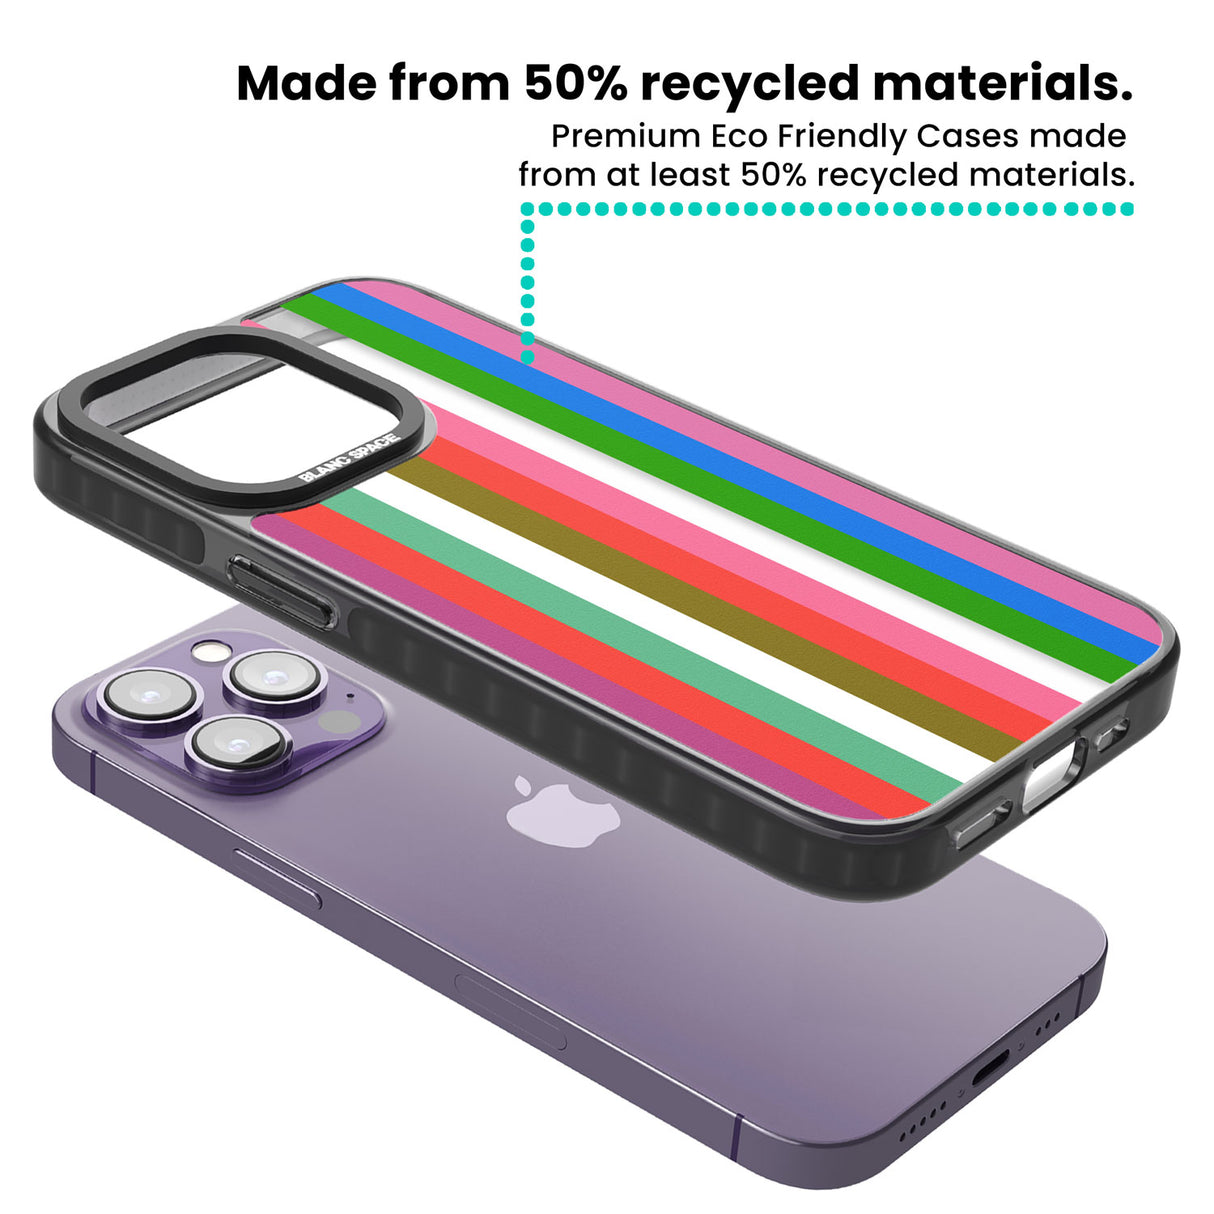 Vibrant Stripes Black Impact Phone Case for iPhone 13 Pro, iPhone 14 Pro, iPhone 15 Pro